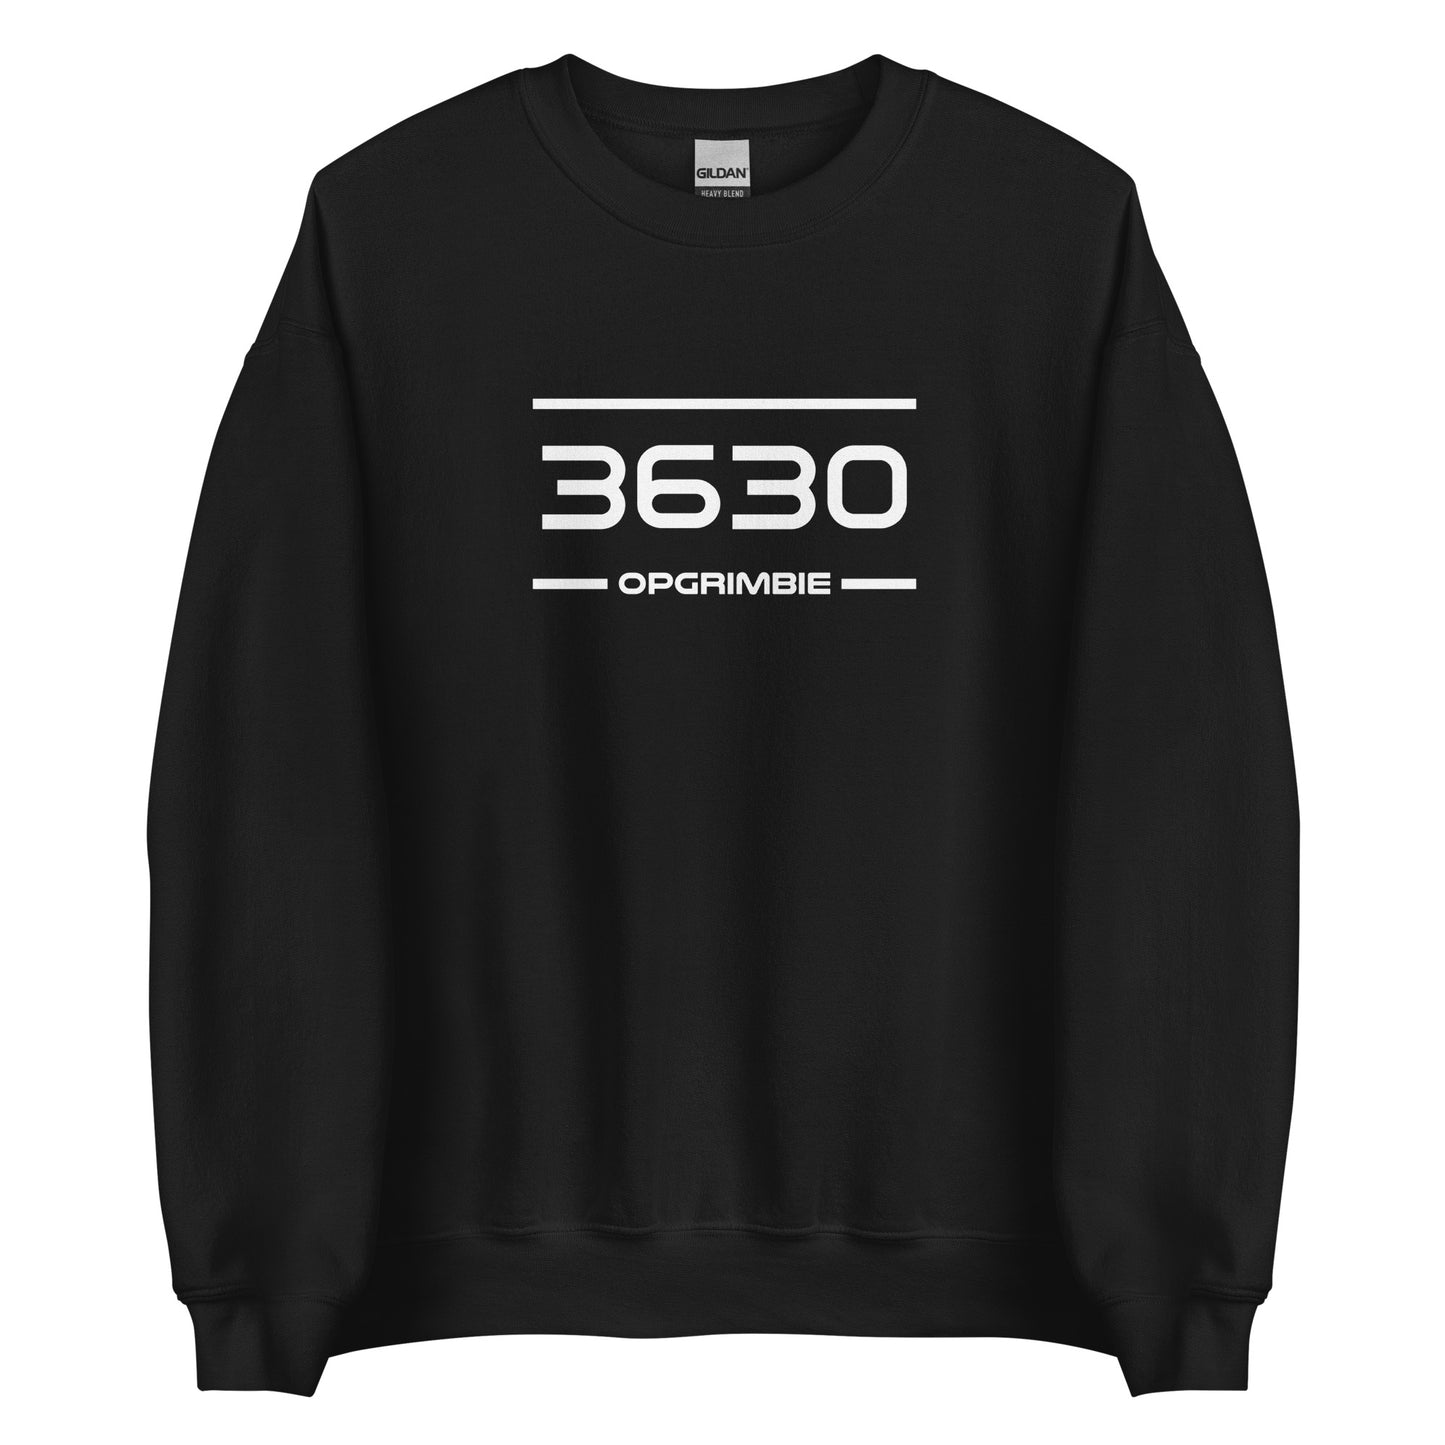 Sweater - 3630 - Opgrimbie (M/V)